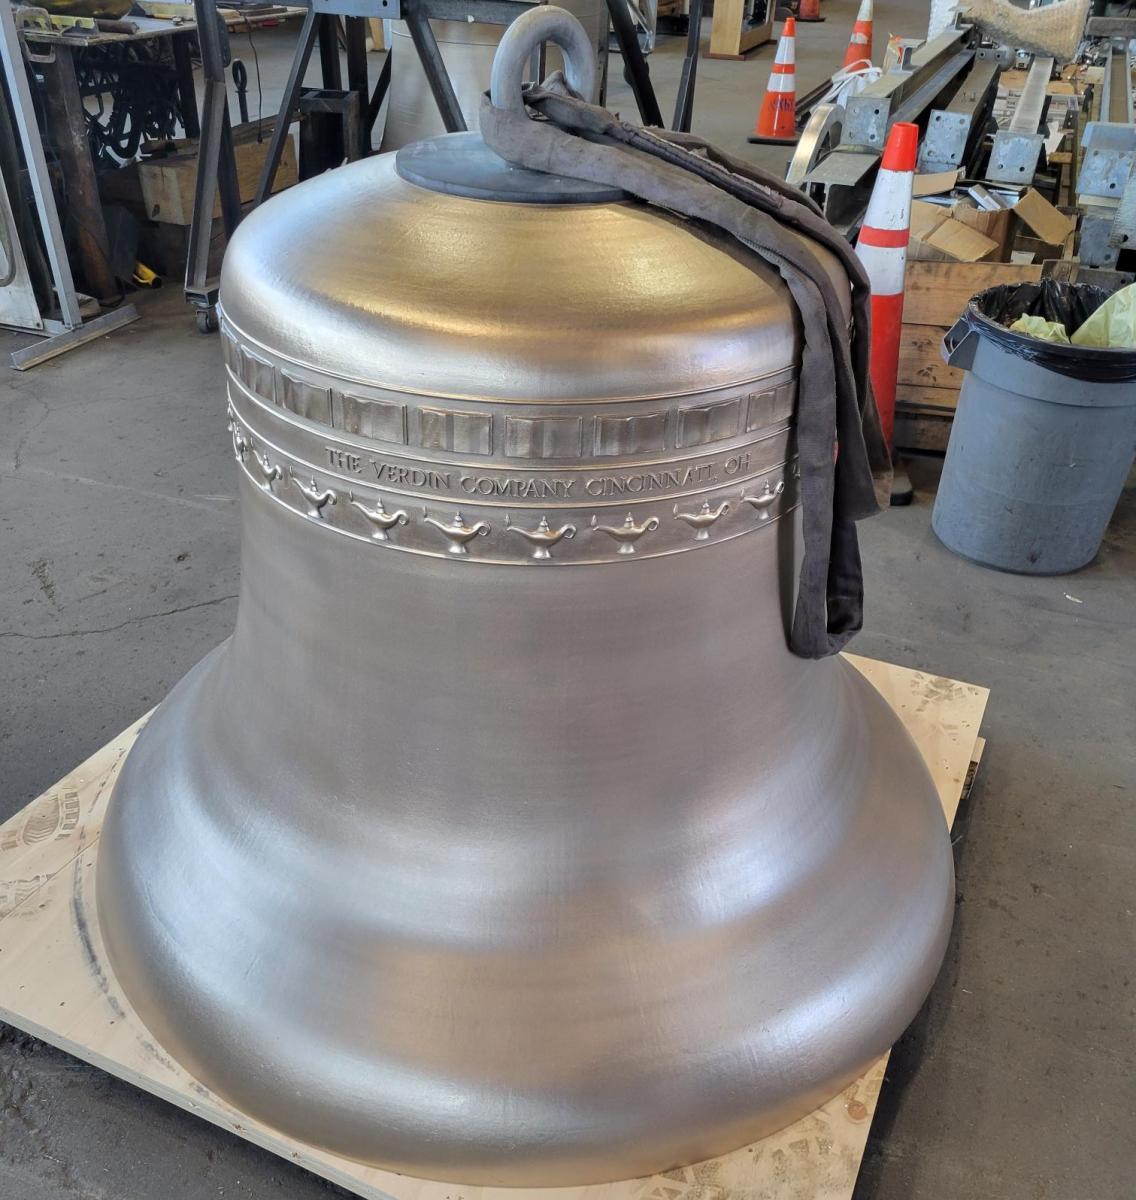 New D1 brass bell on workshop floor